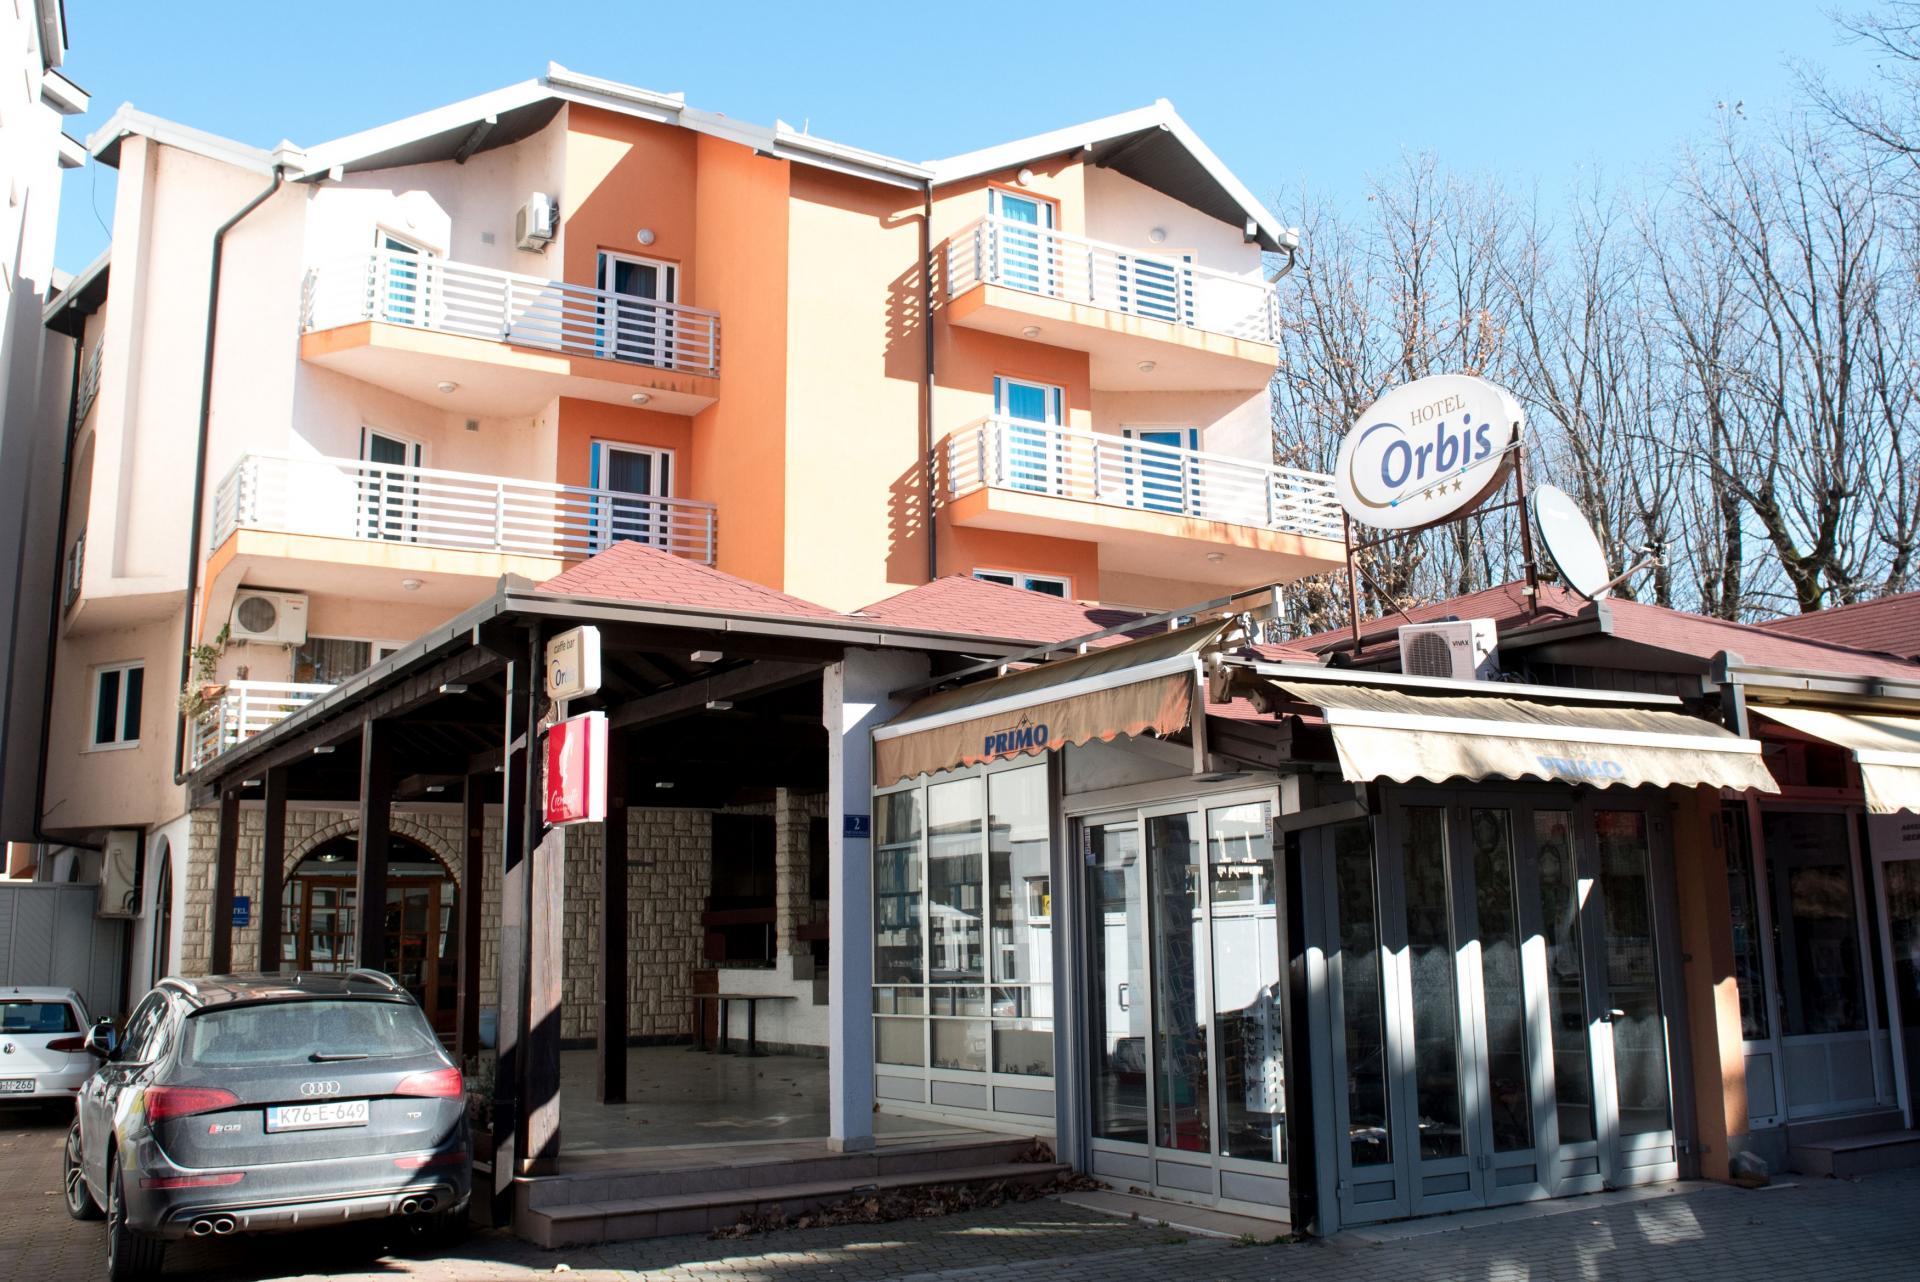 Hotel Orbis 1 - Bośnia i Hercegowina